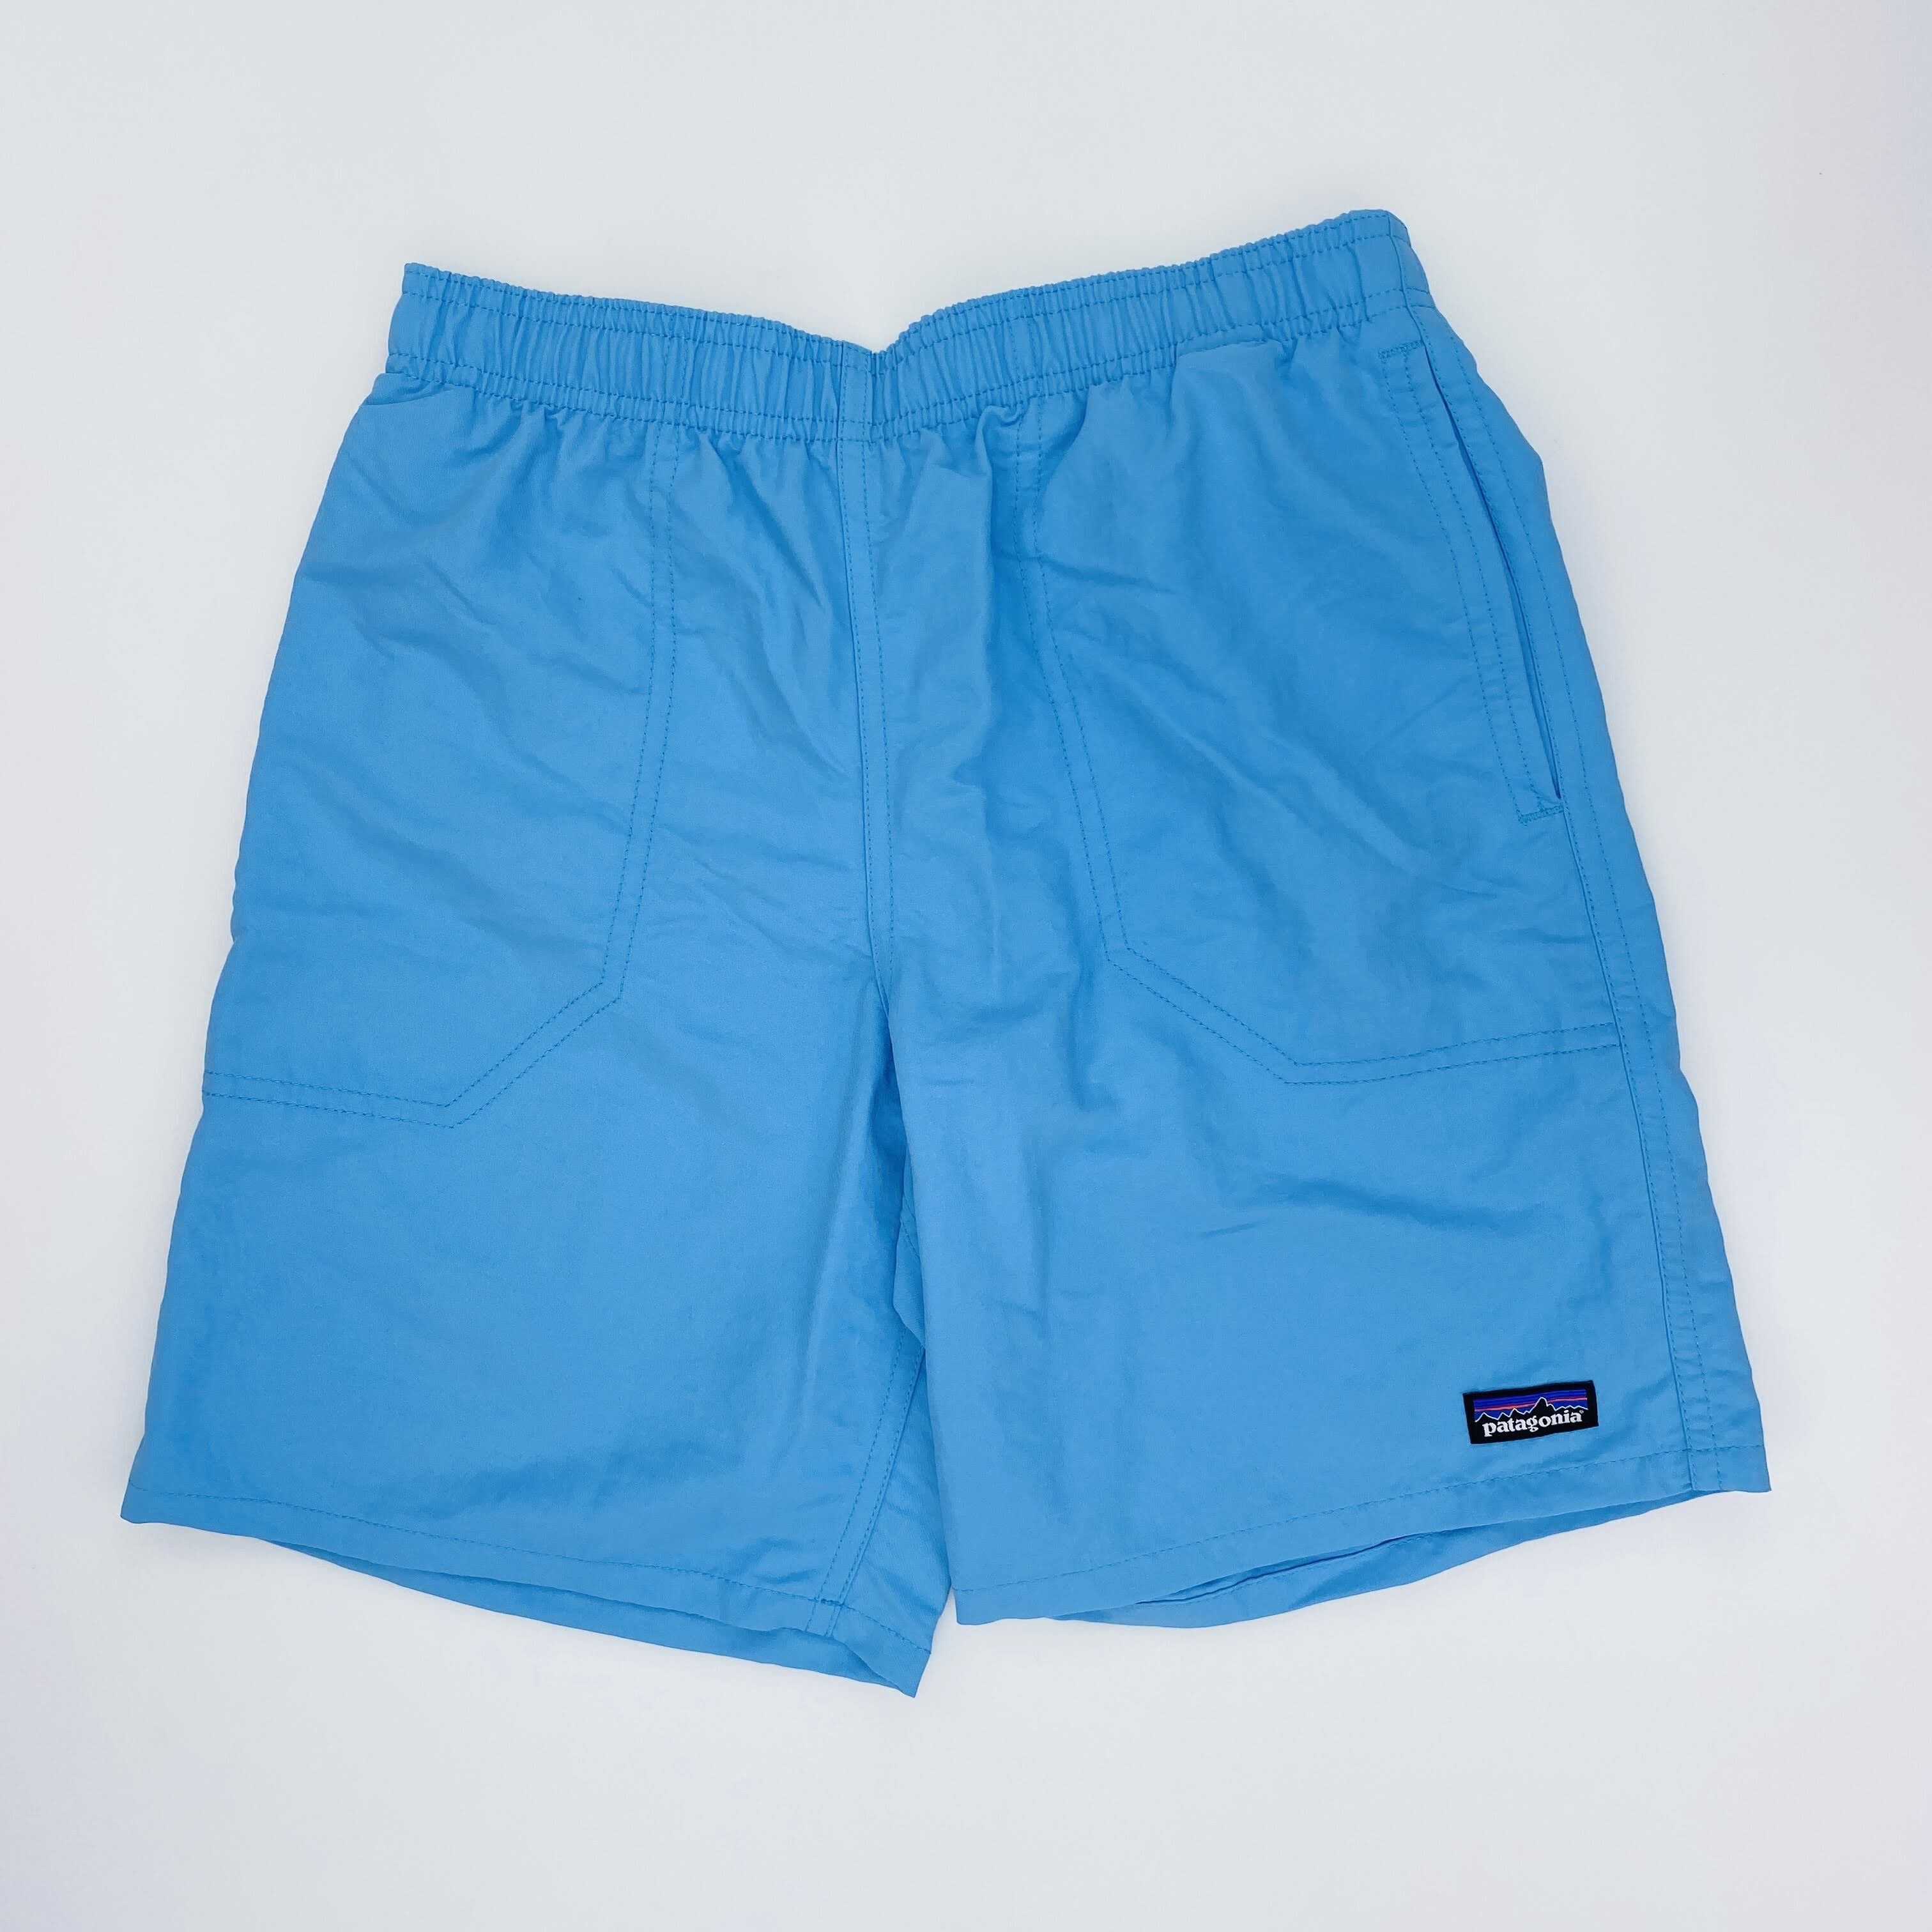 detalles mar Mediterráneo Aclarar Patagonia K's Baggies Shorts 7 in. - Lined - Segunda Mano Pantalones cortos  - Niños - Azul - M | Hardloop